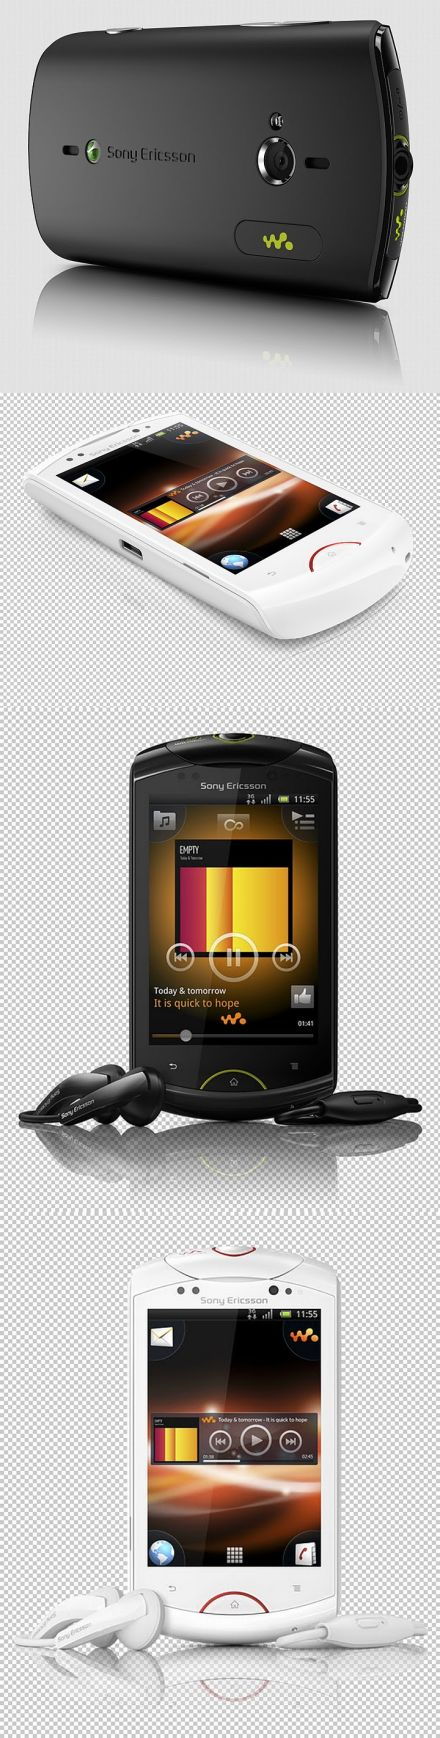 Android és zene: Sony Ericsson Live with Walkman